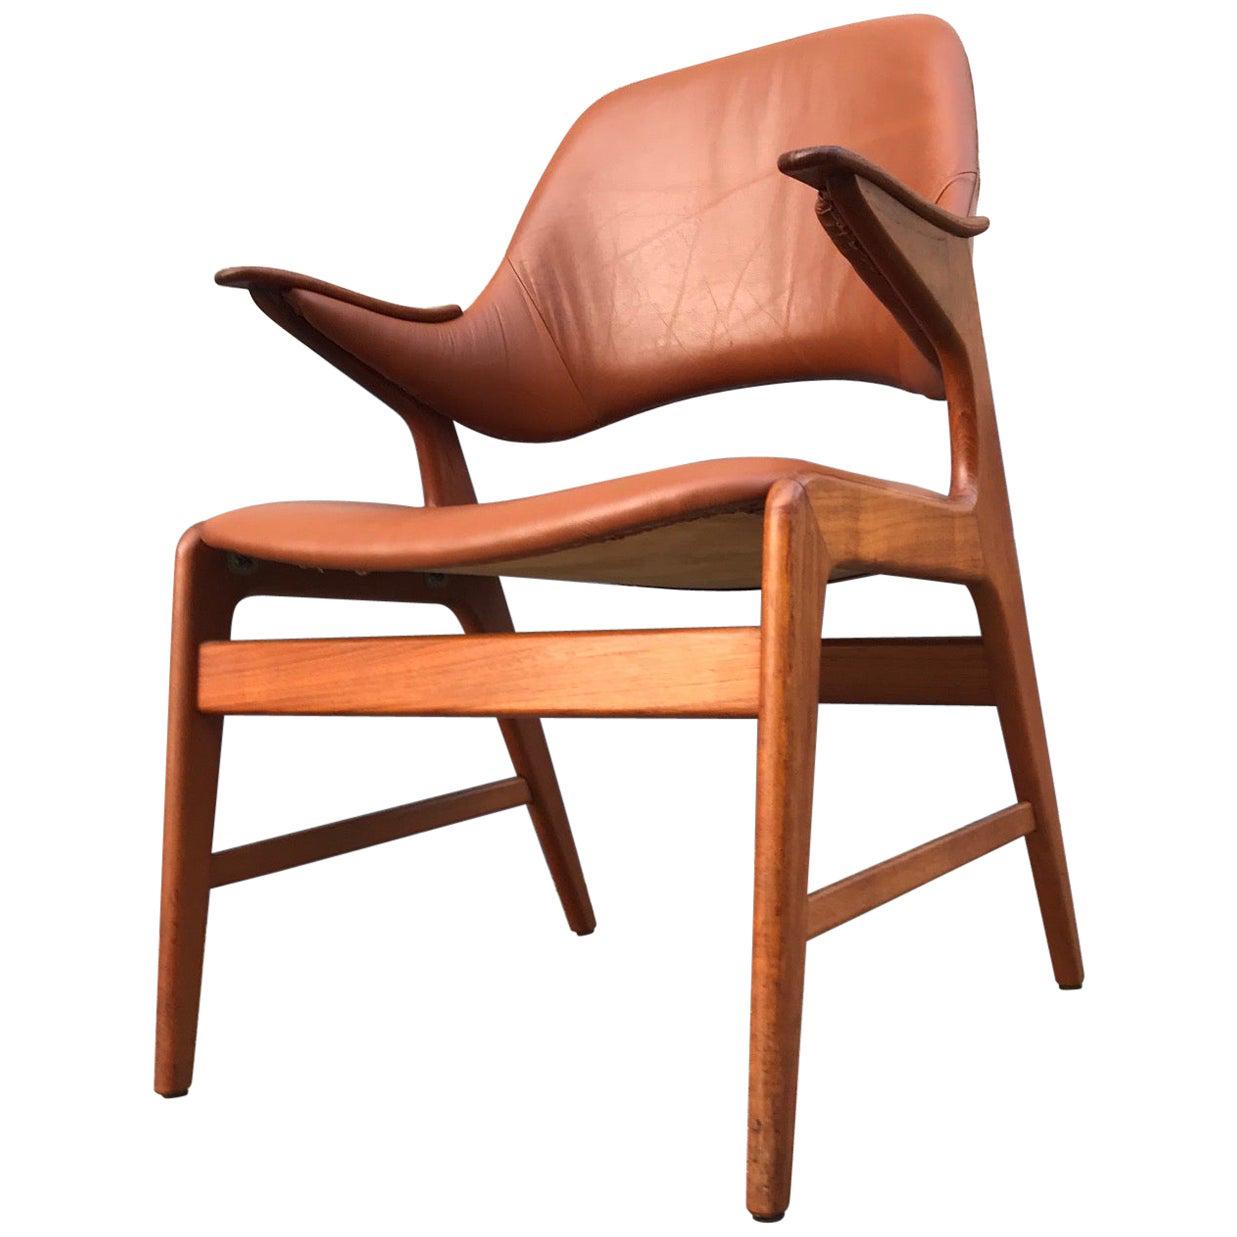 Danish Modern Teak and Leather Lounge Chair by N. A. Jørgensen, 1960s